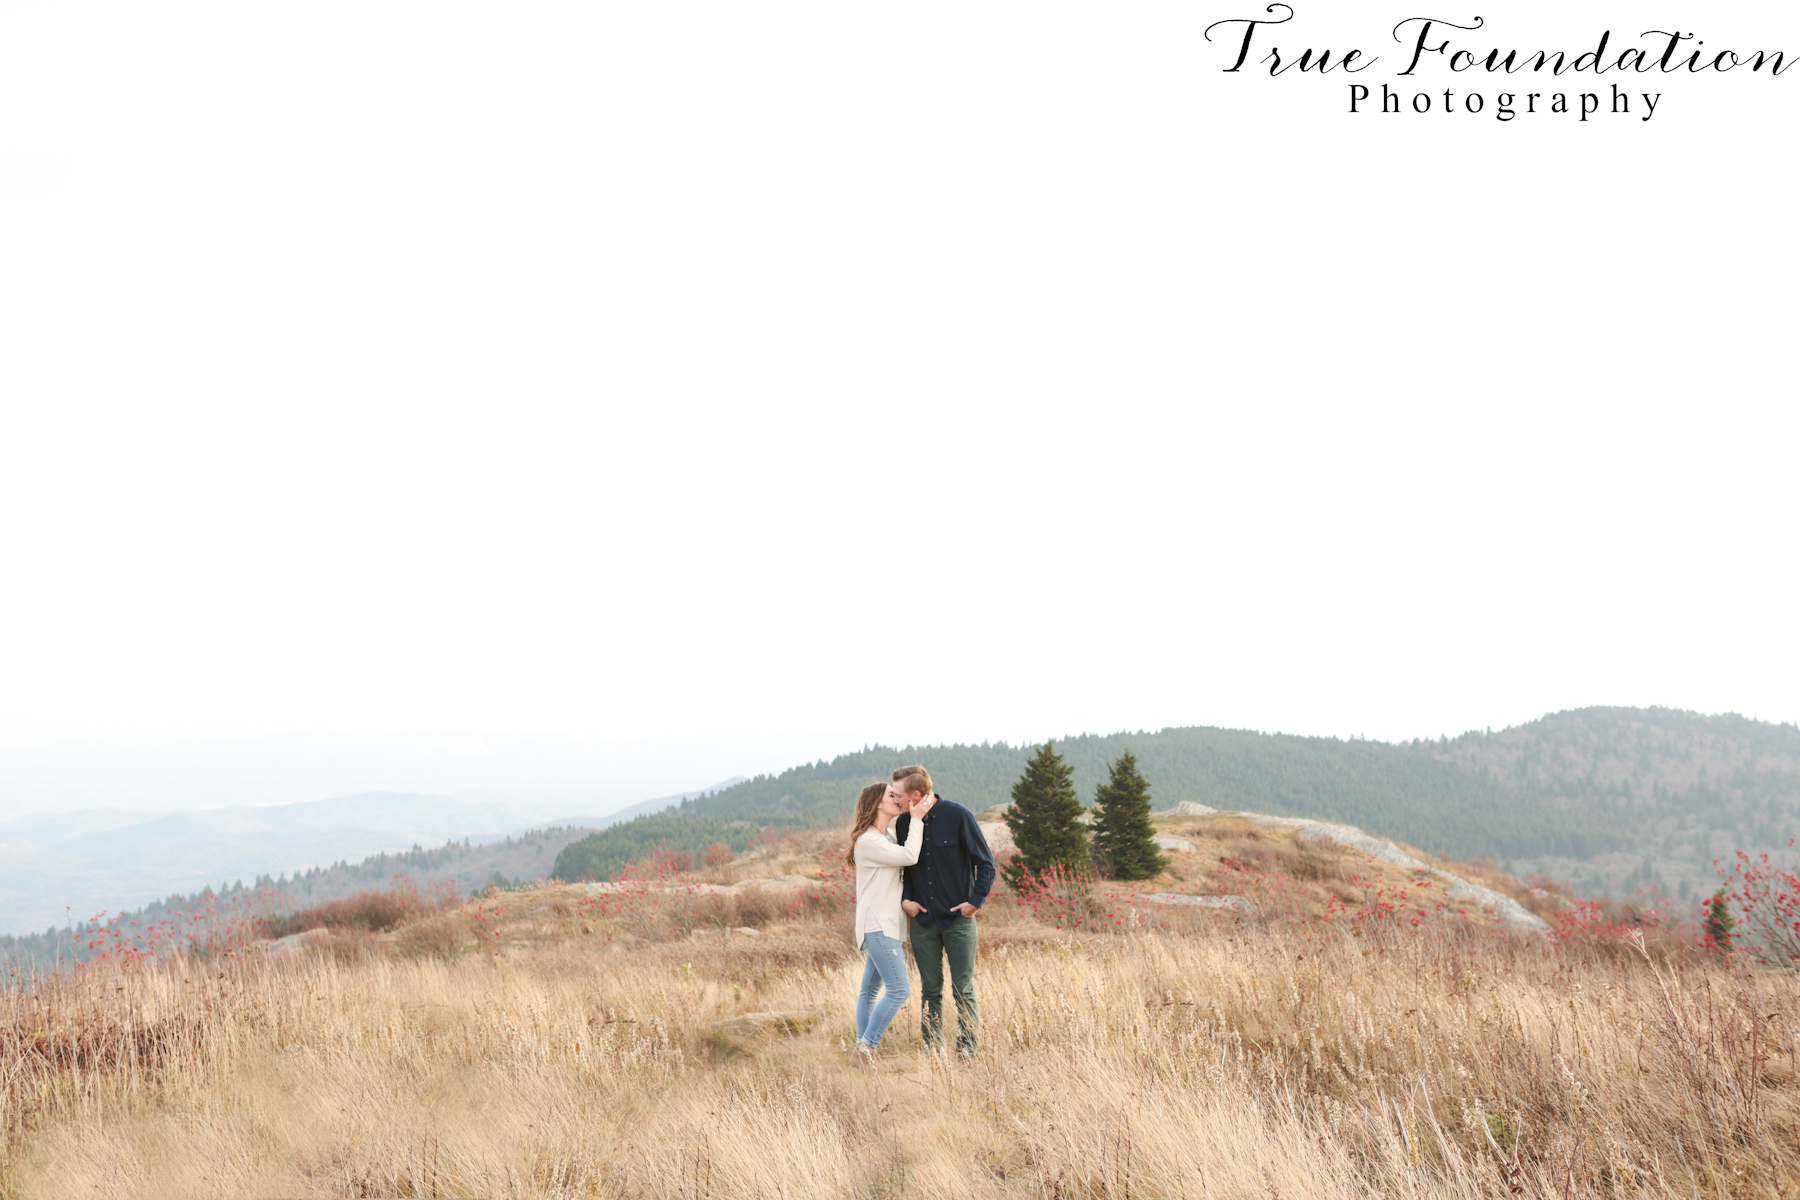 black-balsam-knob-nc-photographer-wedding-engagement-photography-photos-asheville-hendersonville-mountain-engagement-anniversary-couple-hiking-15